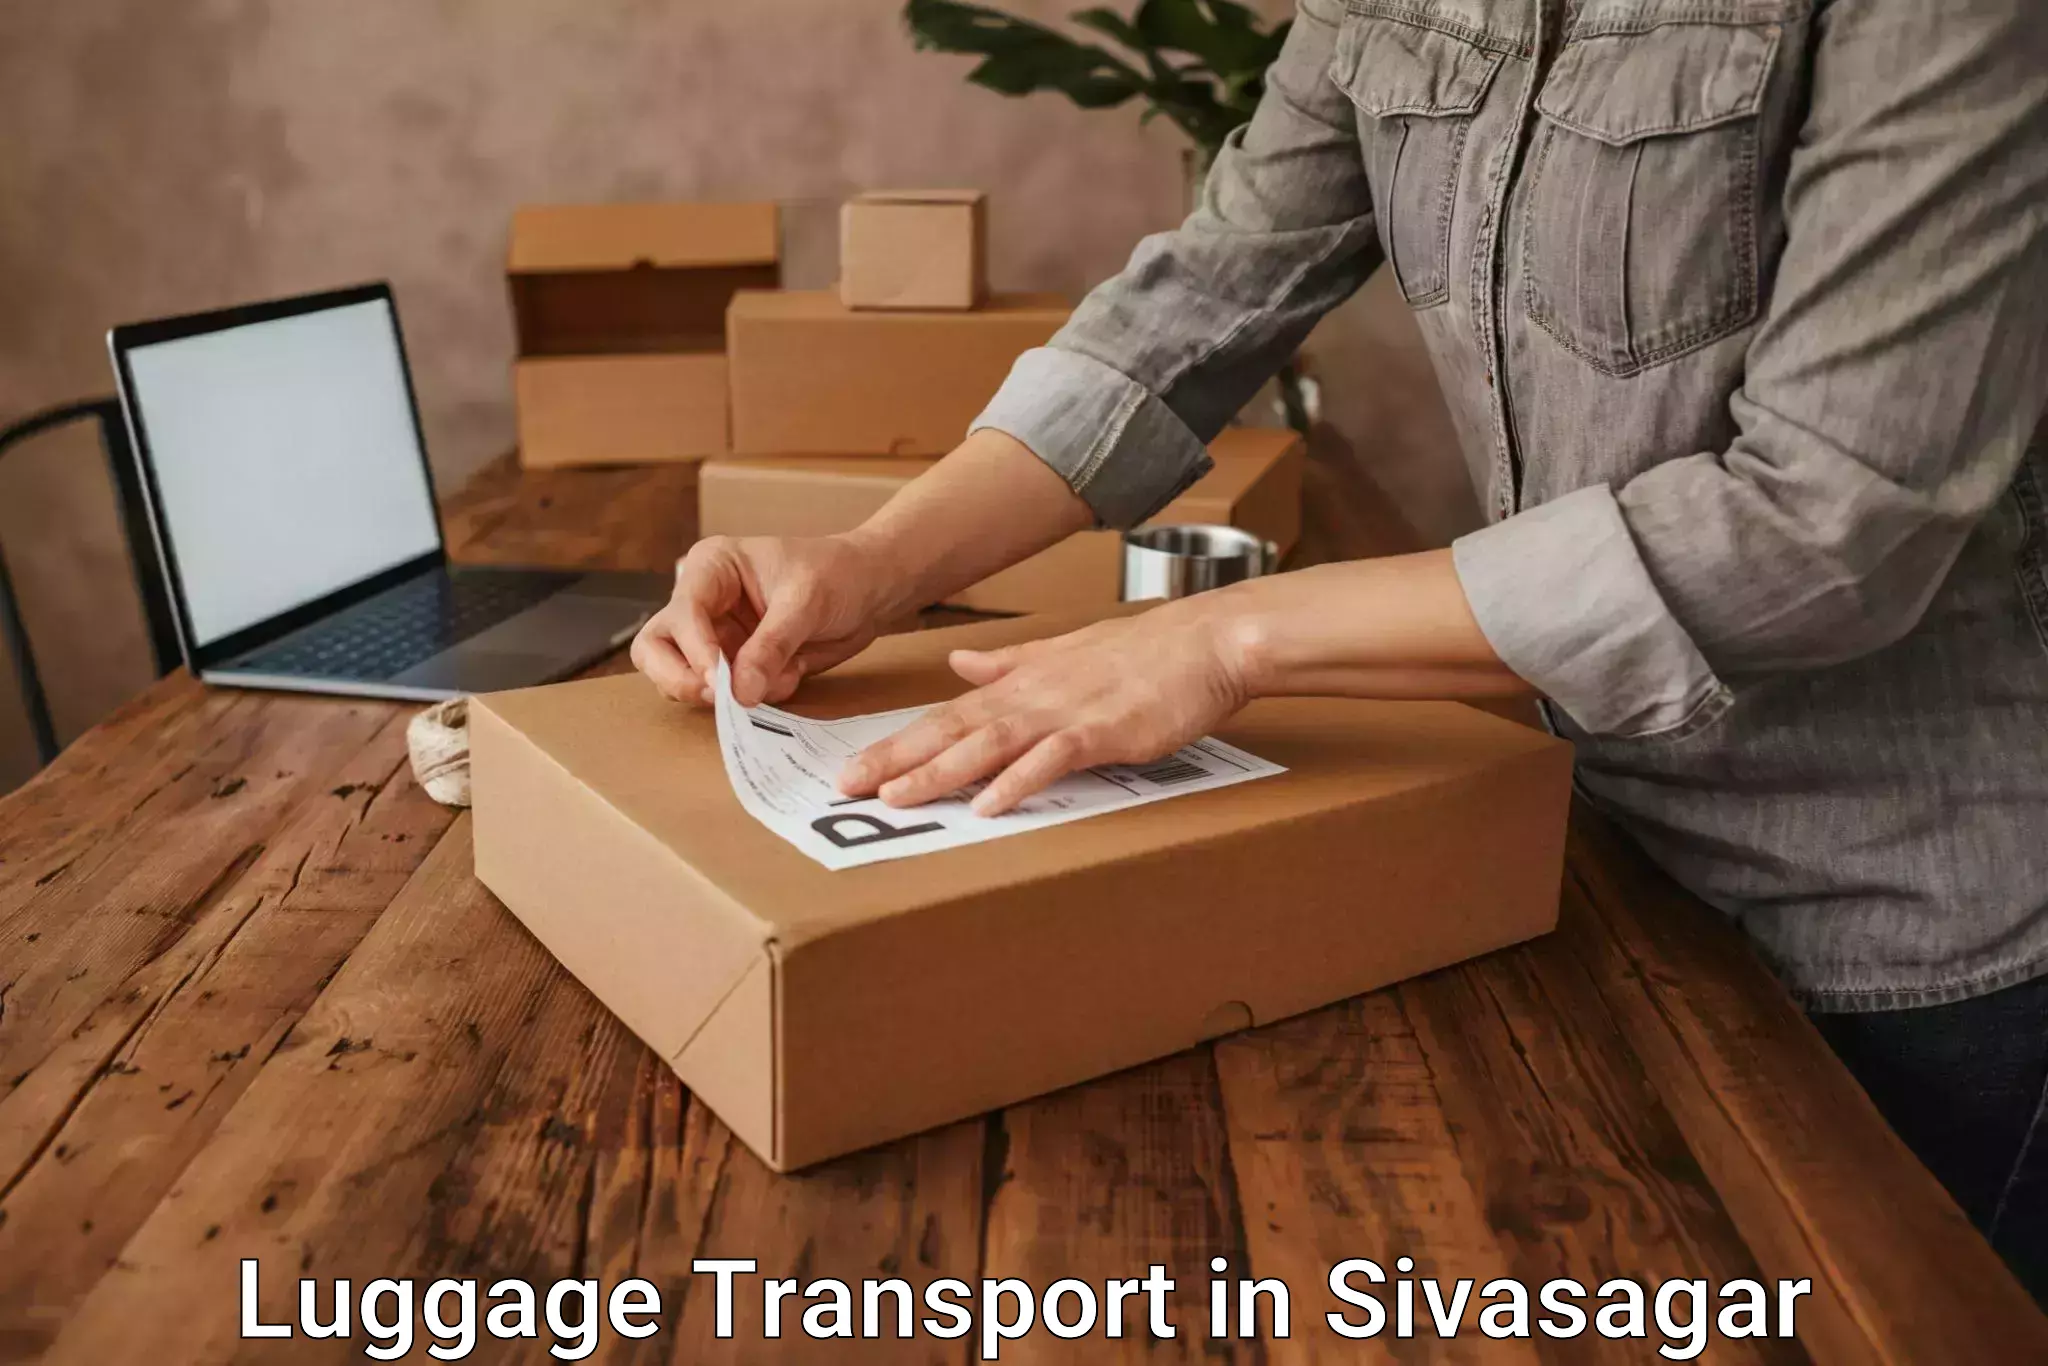 Luggage transport rates in Sivasagar